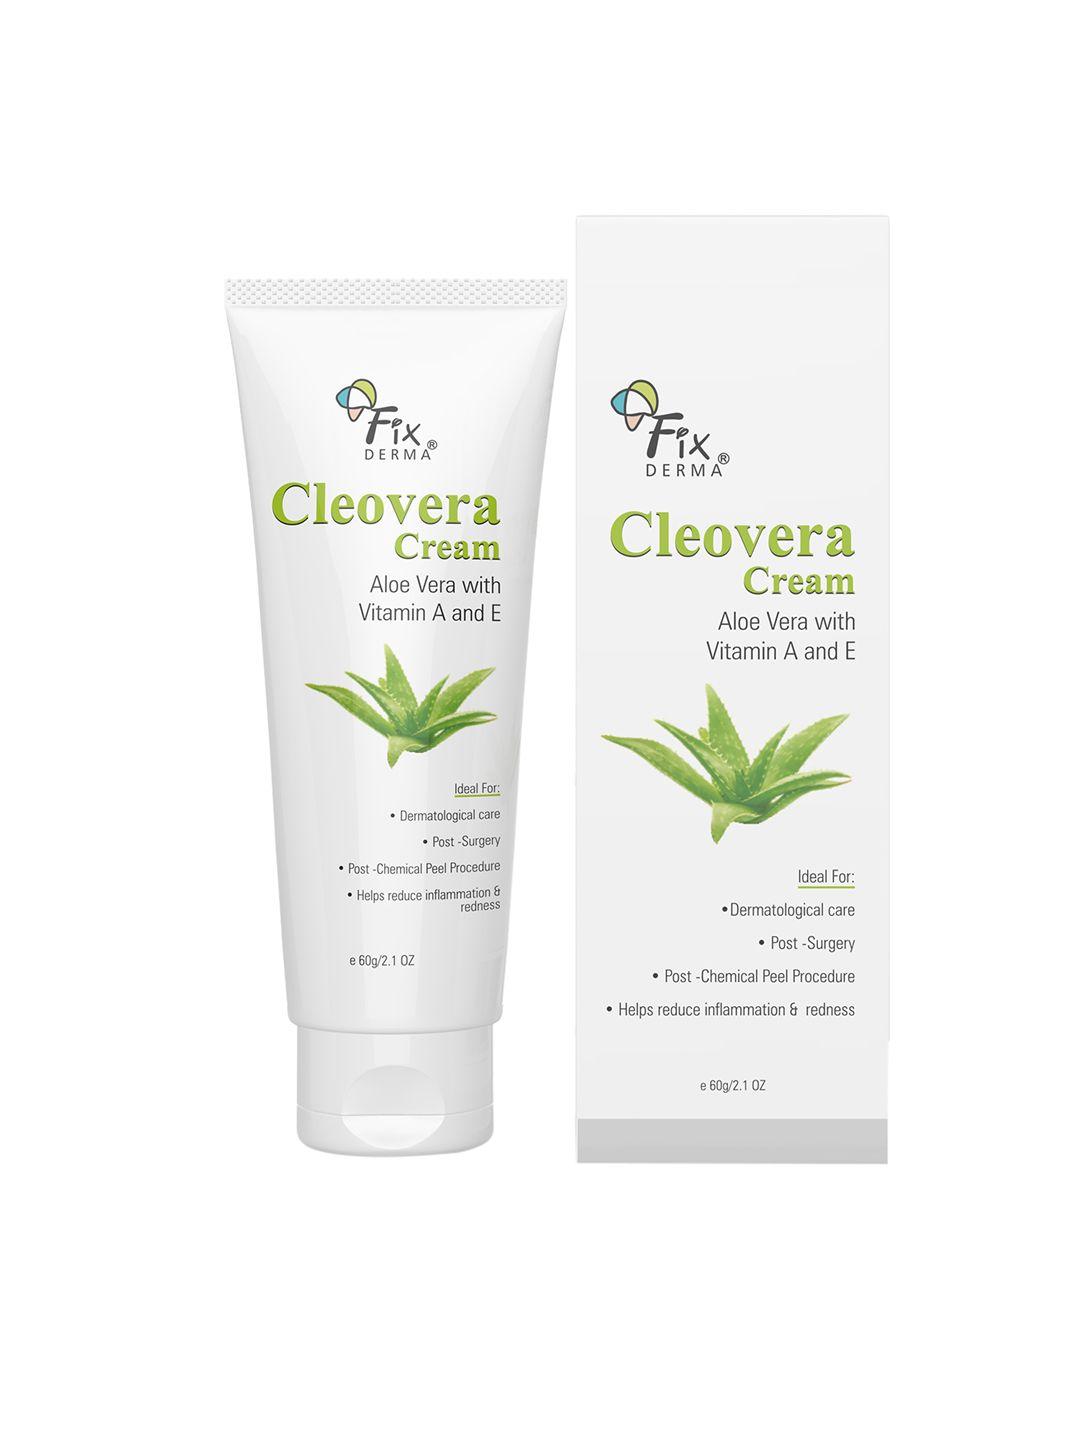 fixderma cleovera paraben free skin moisturizer cream with aloe vera - 60gm